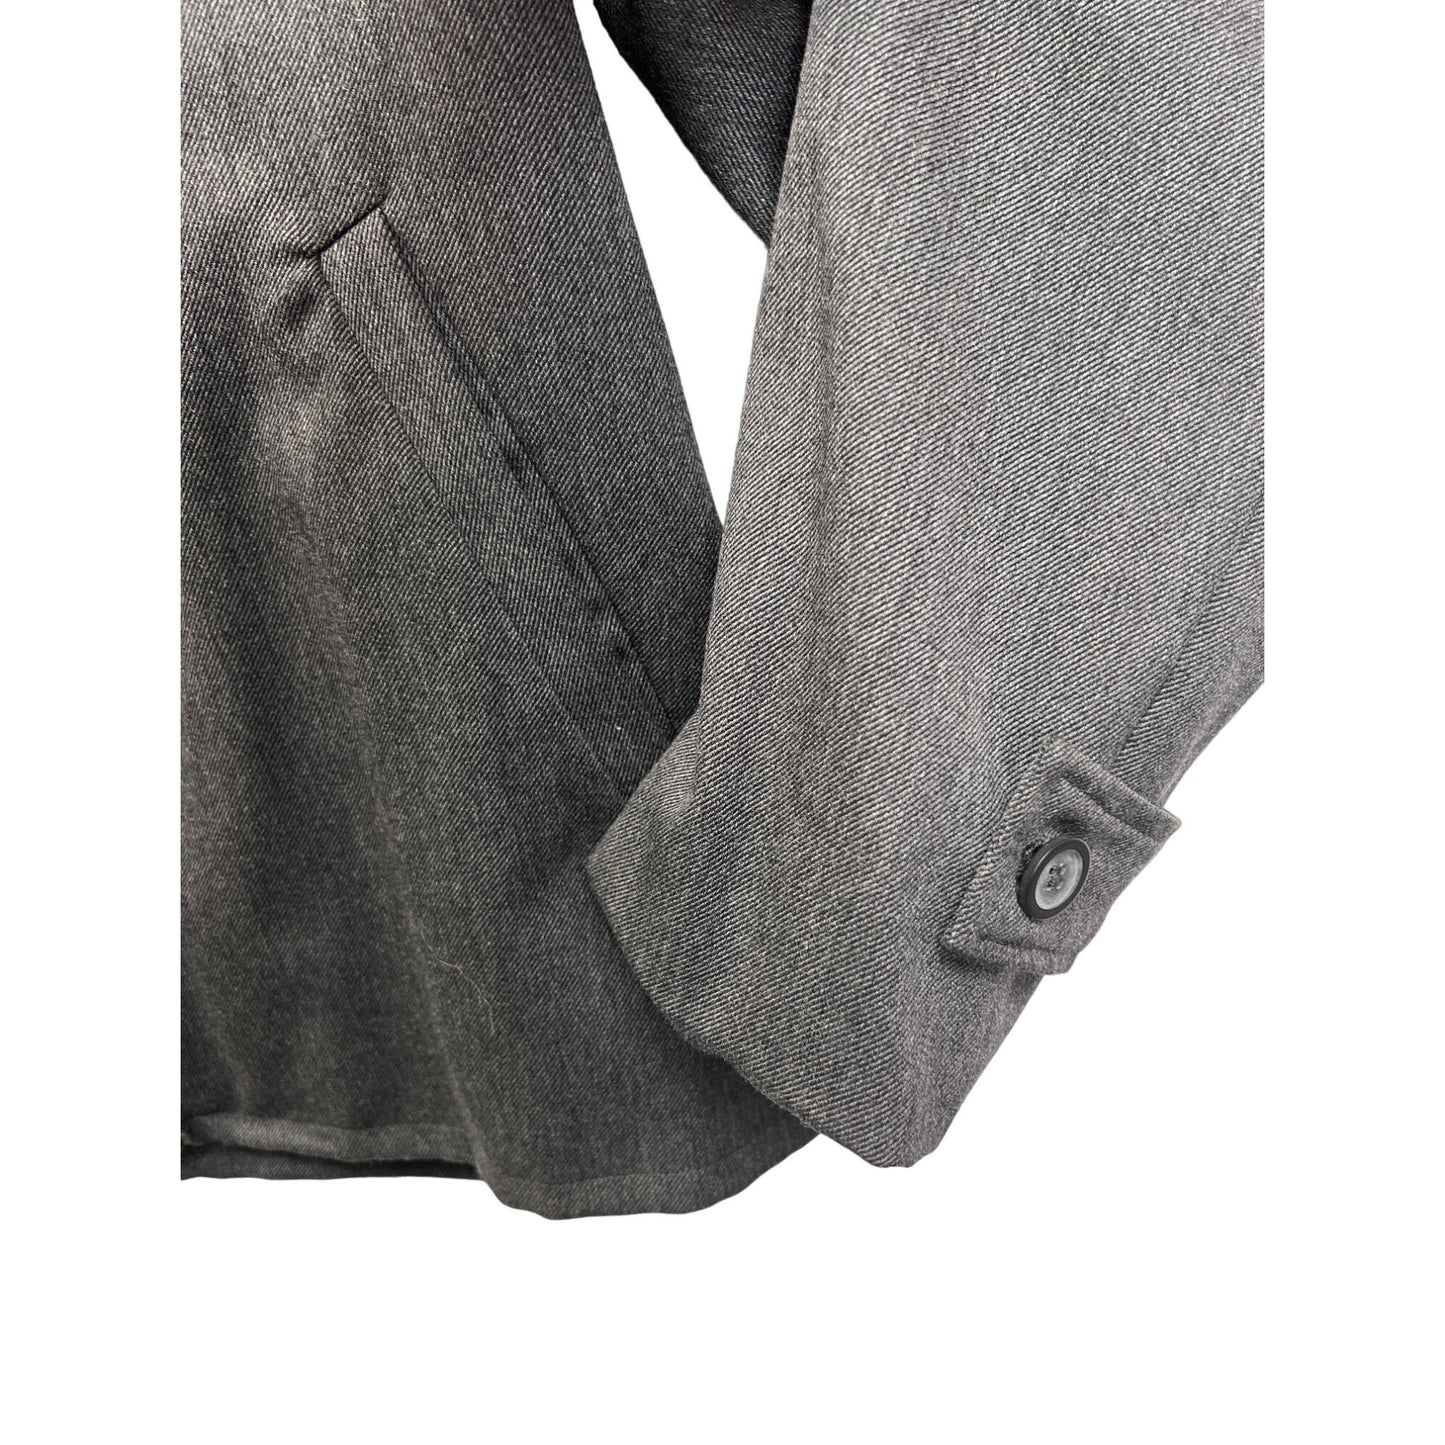 The J. Peterman Company Vintage Angelico 100% Wool Jacket